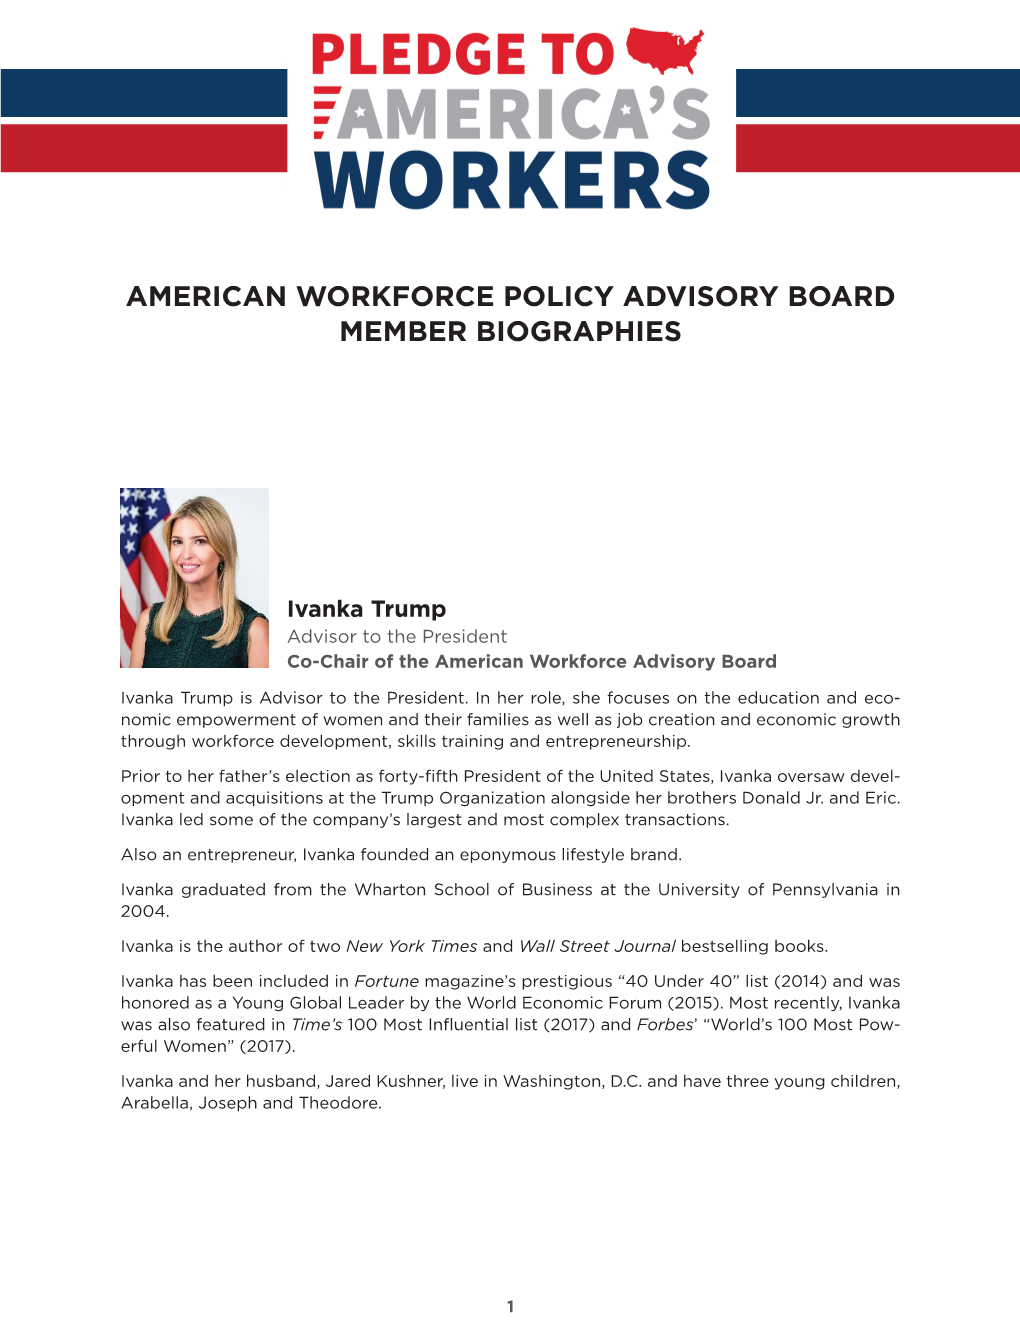 American Workforce Policy Advisory Board Member Biographies